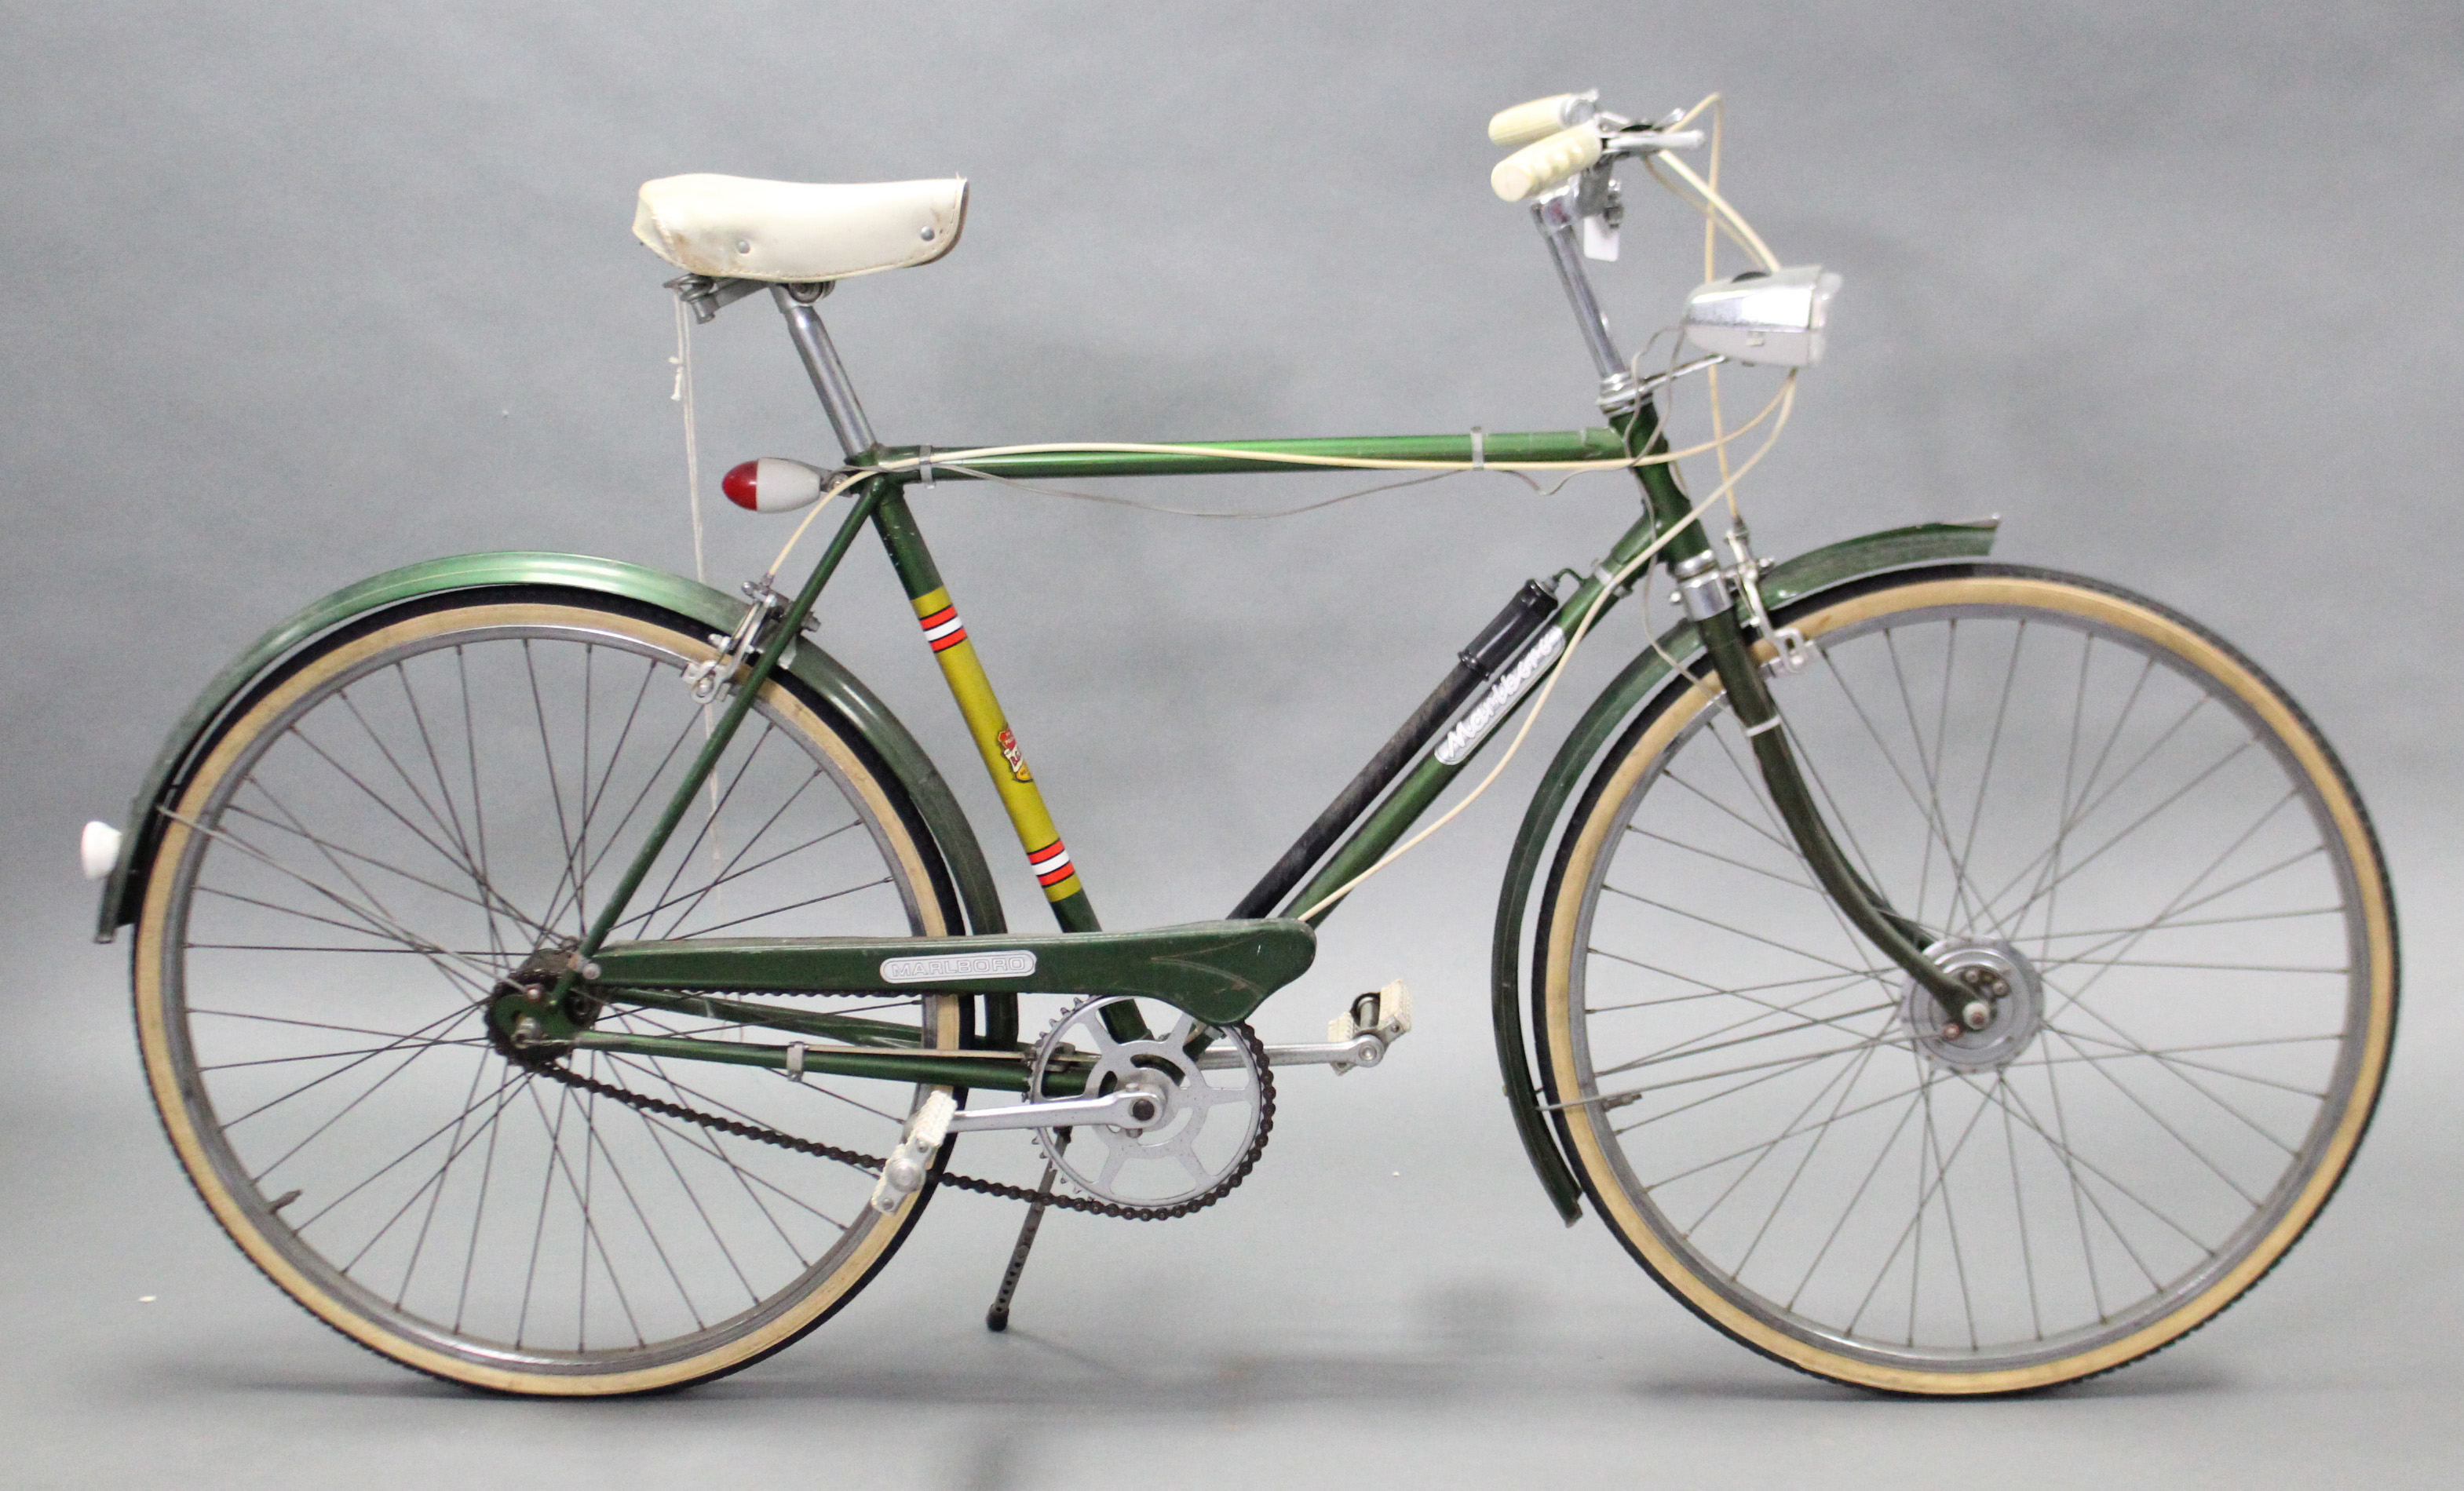 A 1980’s Marlboro three-speed gents bicycle (green).